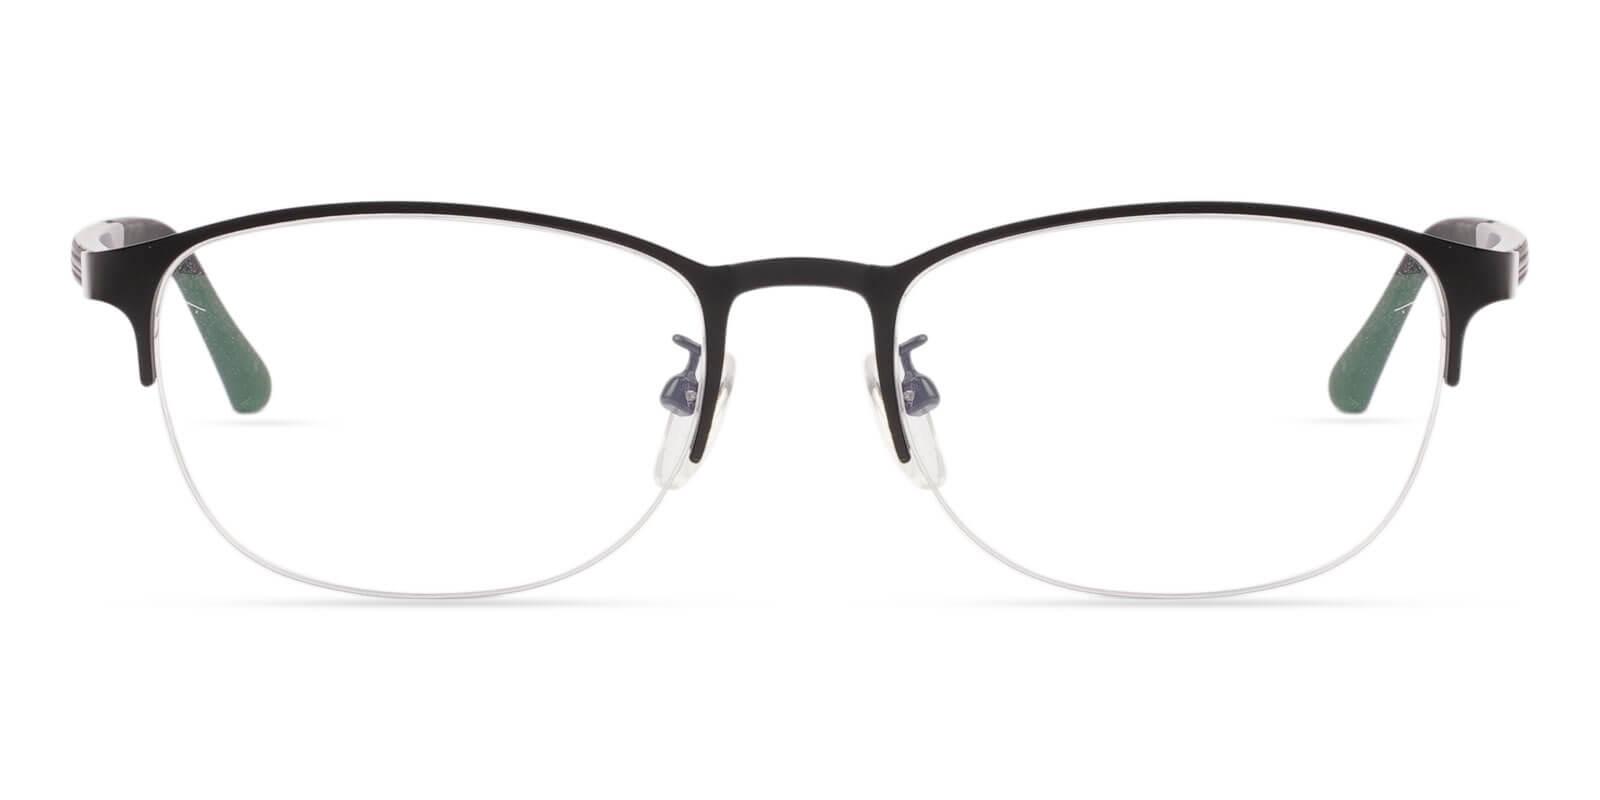 Victoria Black Metal Eyeglasses , NosePads Frames from ABBE Glasses